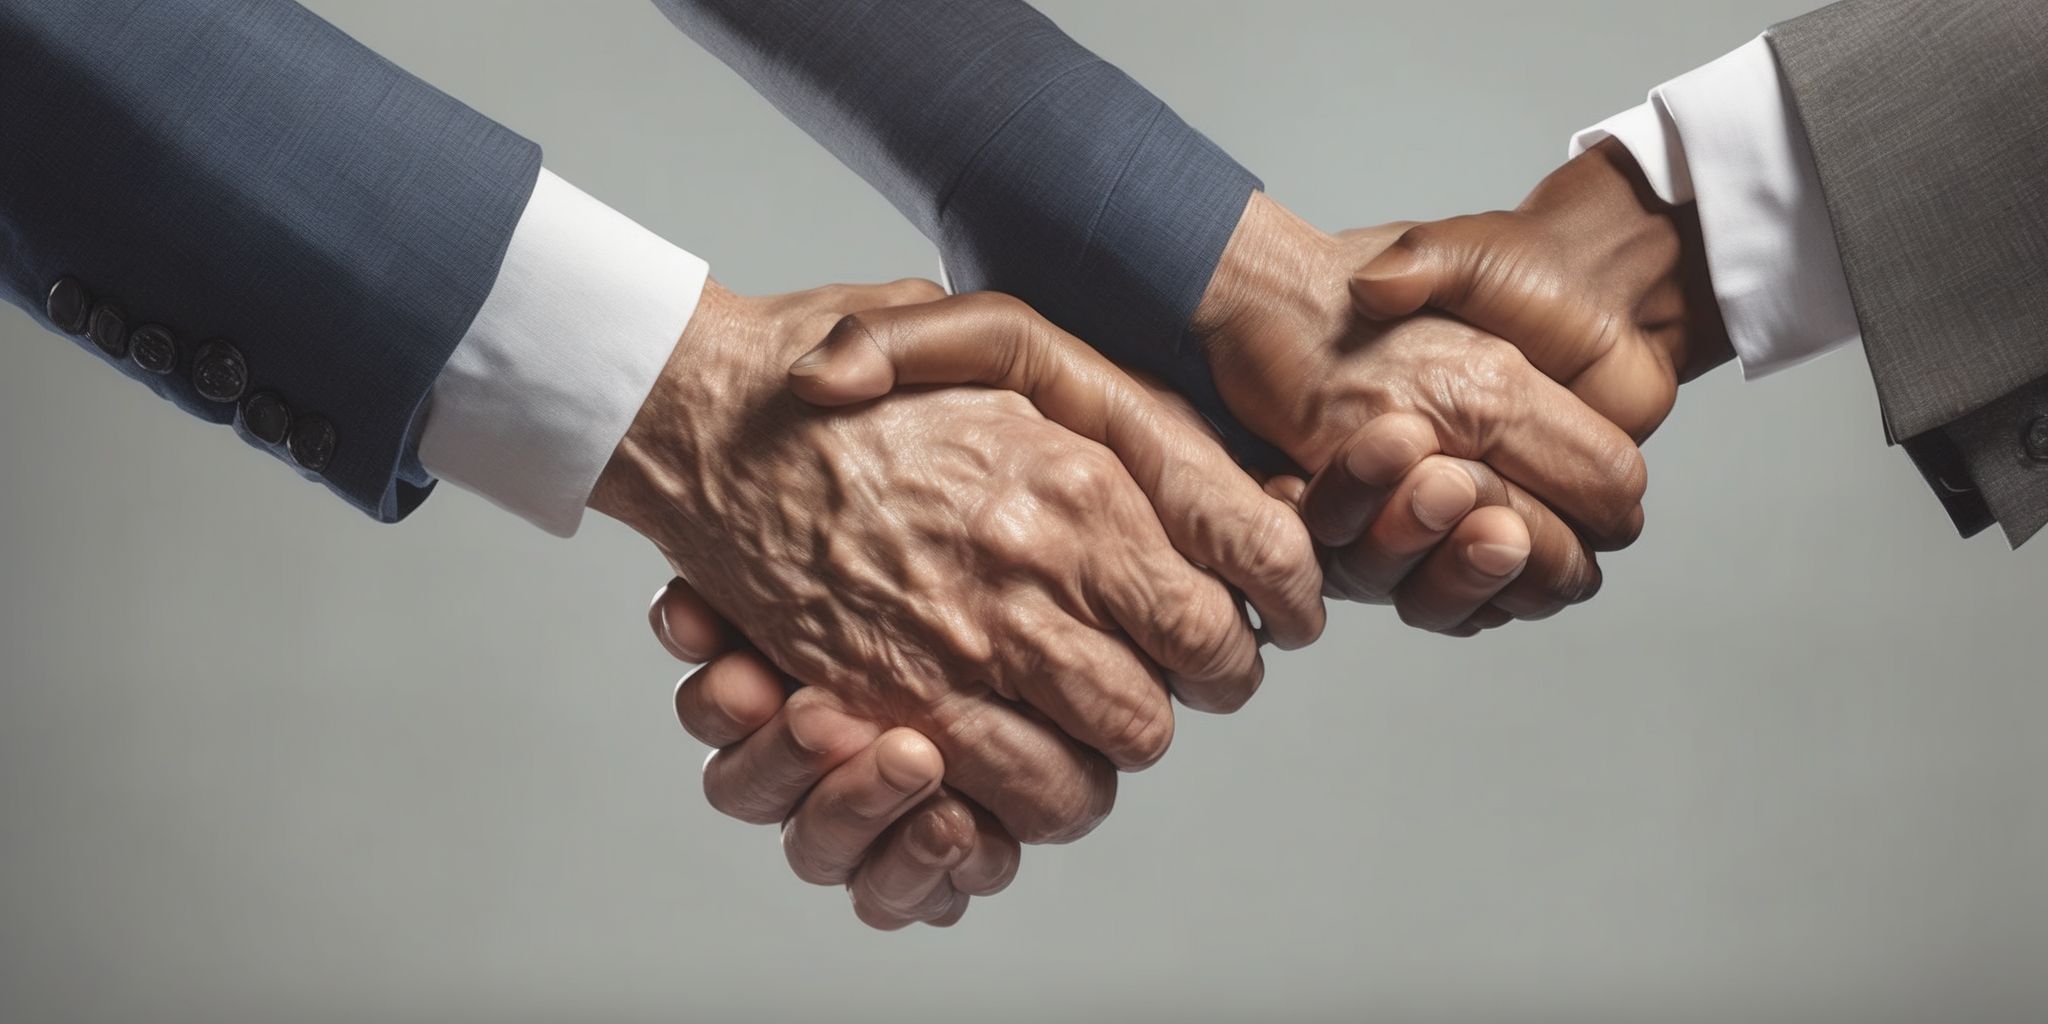 Handshake  in realistic, photographic style